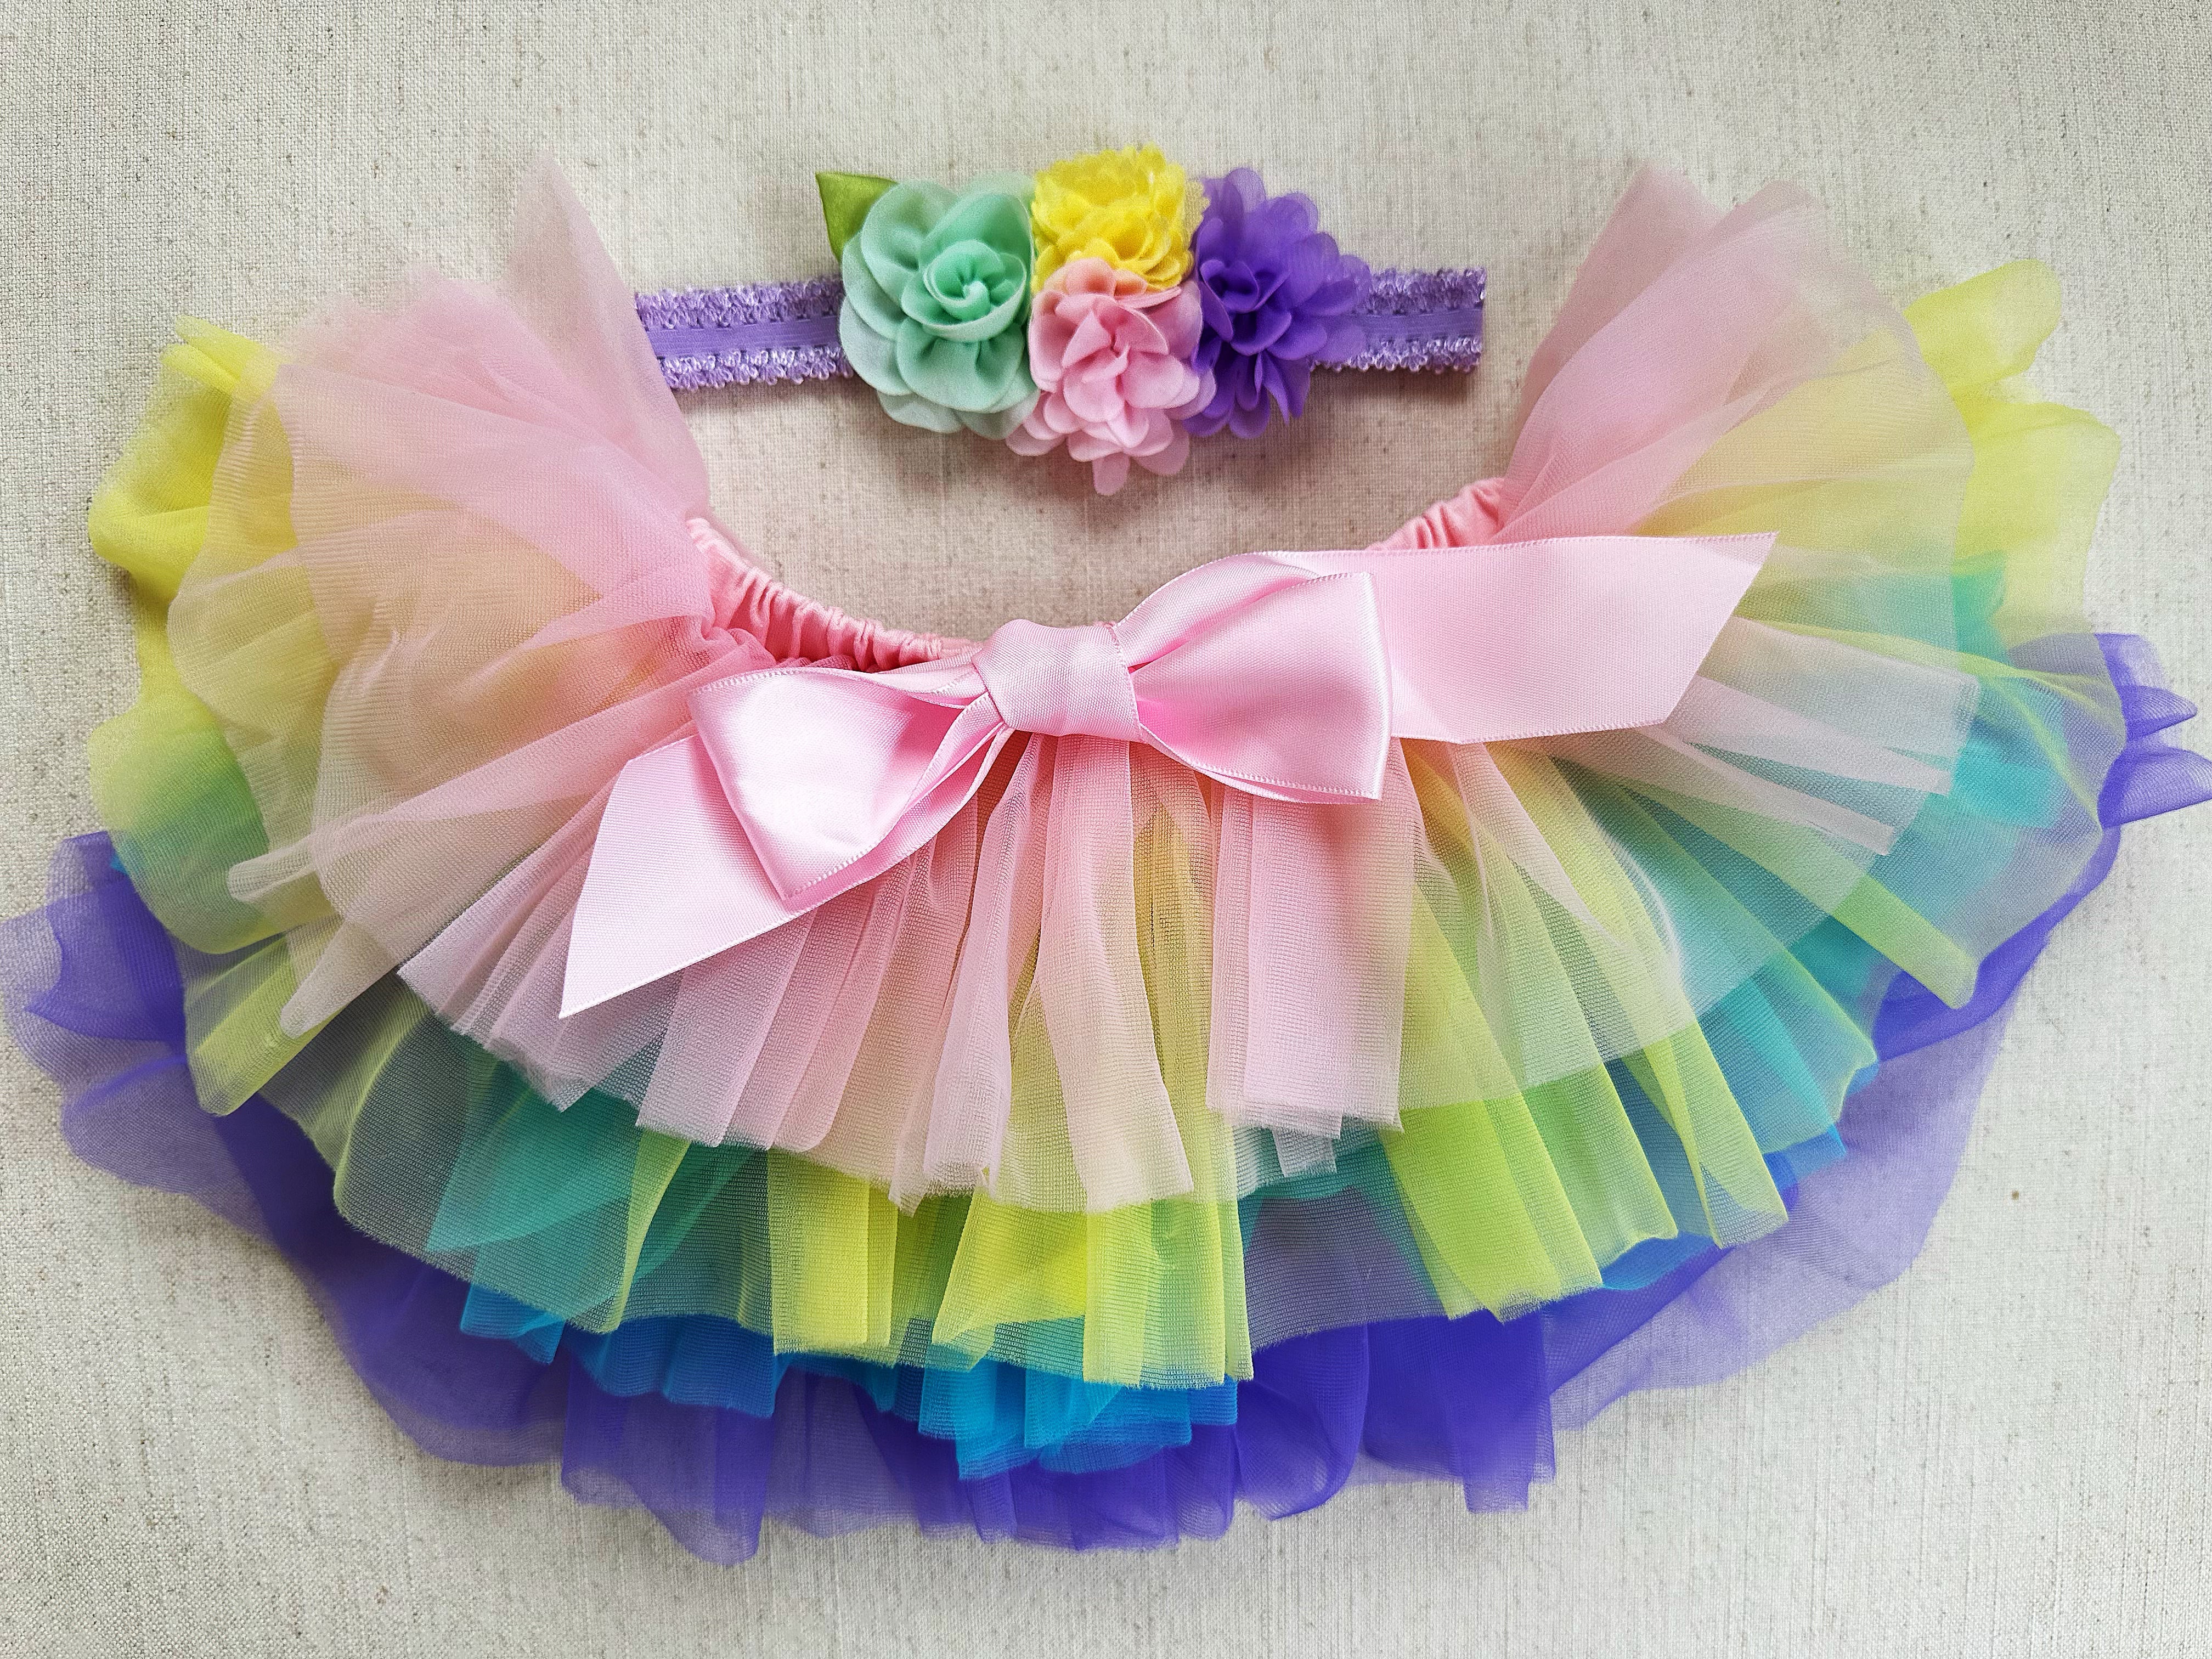 Tutu Skirt For Baby Rainbow